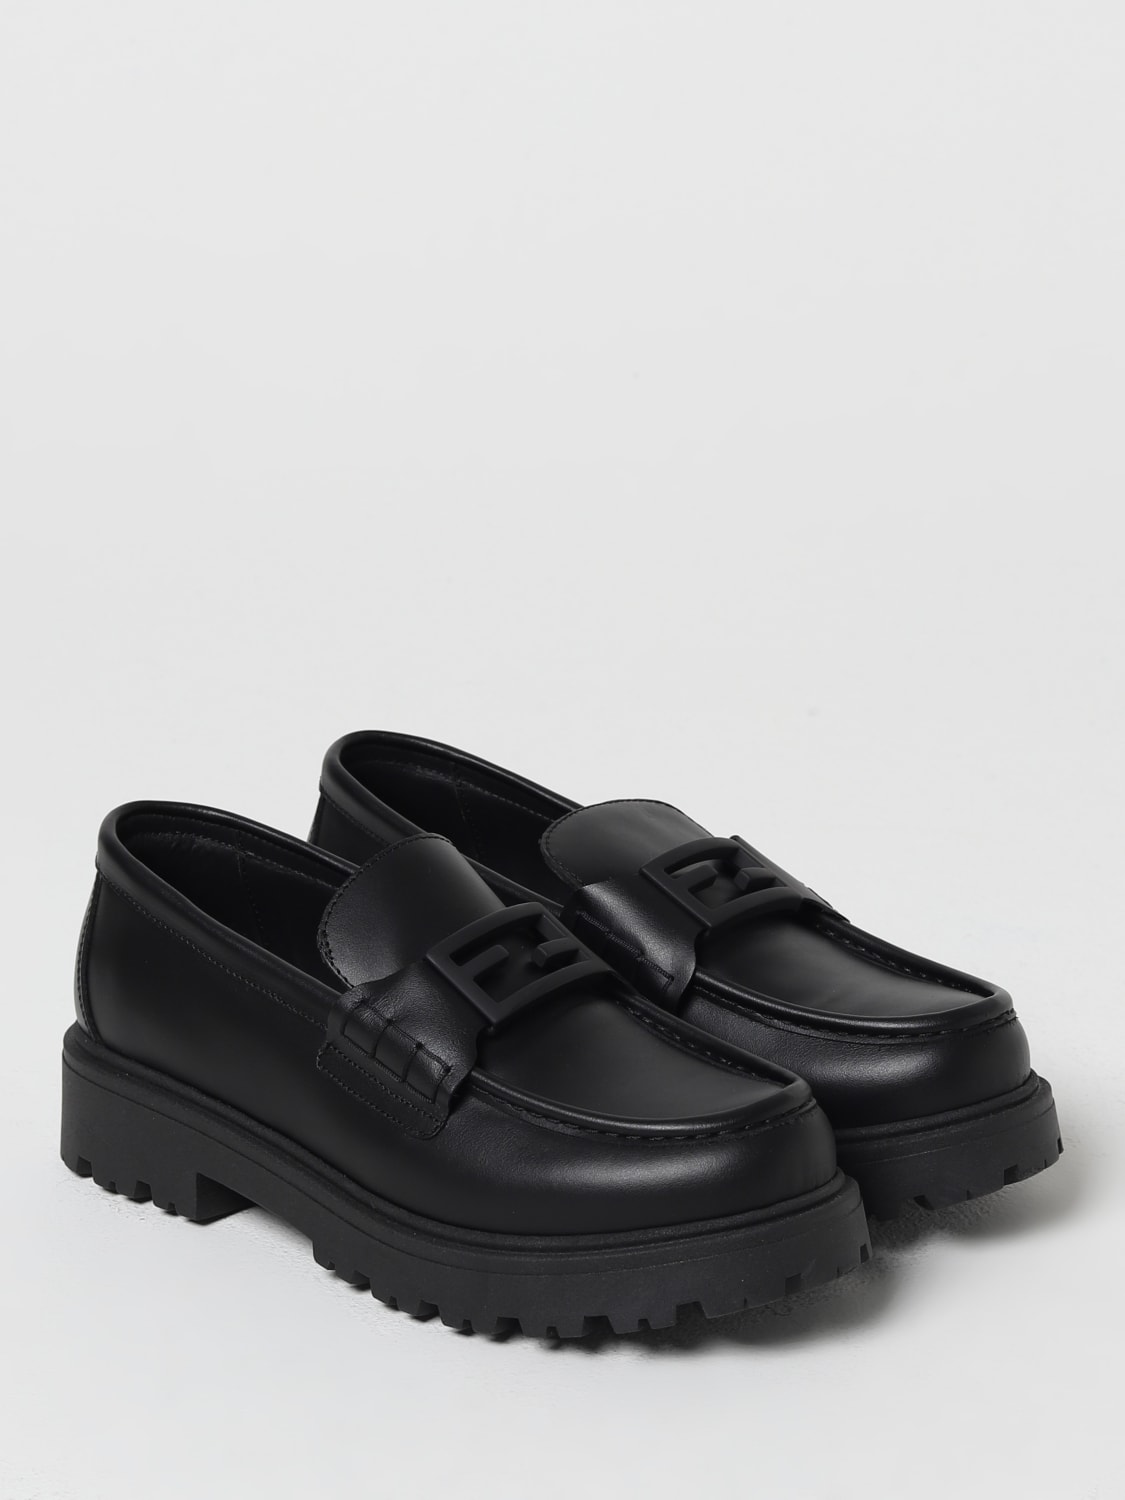 FENDI KIDS: Shoes kids - Black | FENDI KIDS shoes JMR460NA7 online at ...